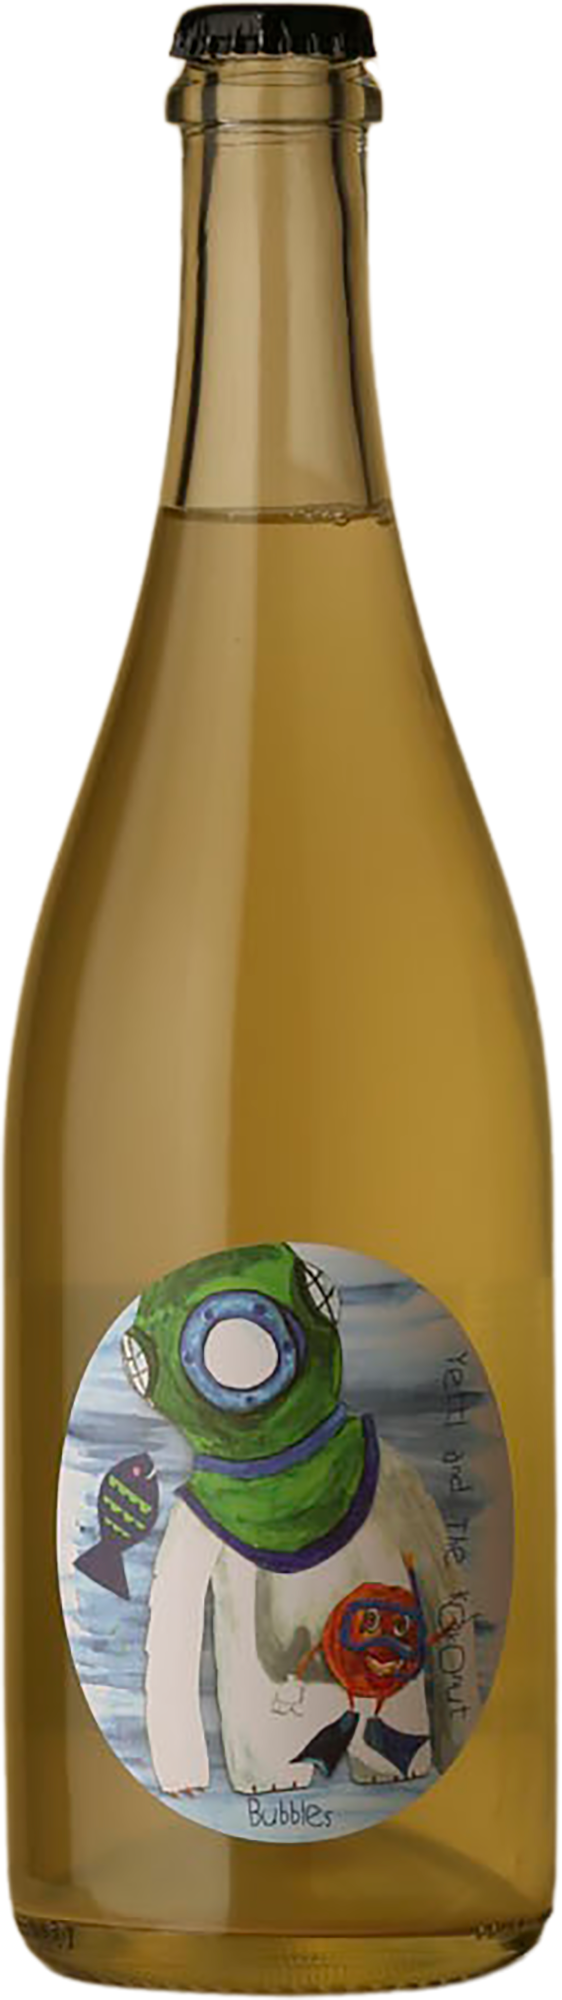 Yetti and the Kokonut - Bubbles Savagnin 2021 Sparkling Wine